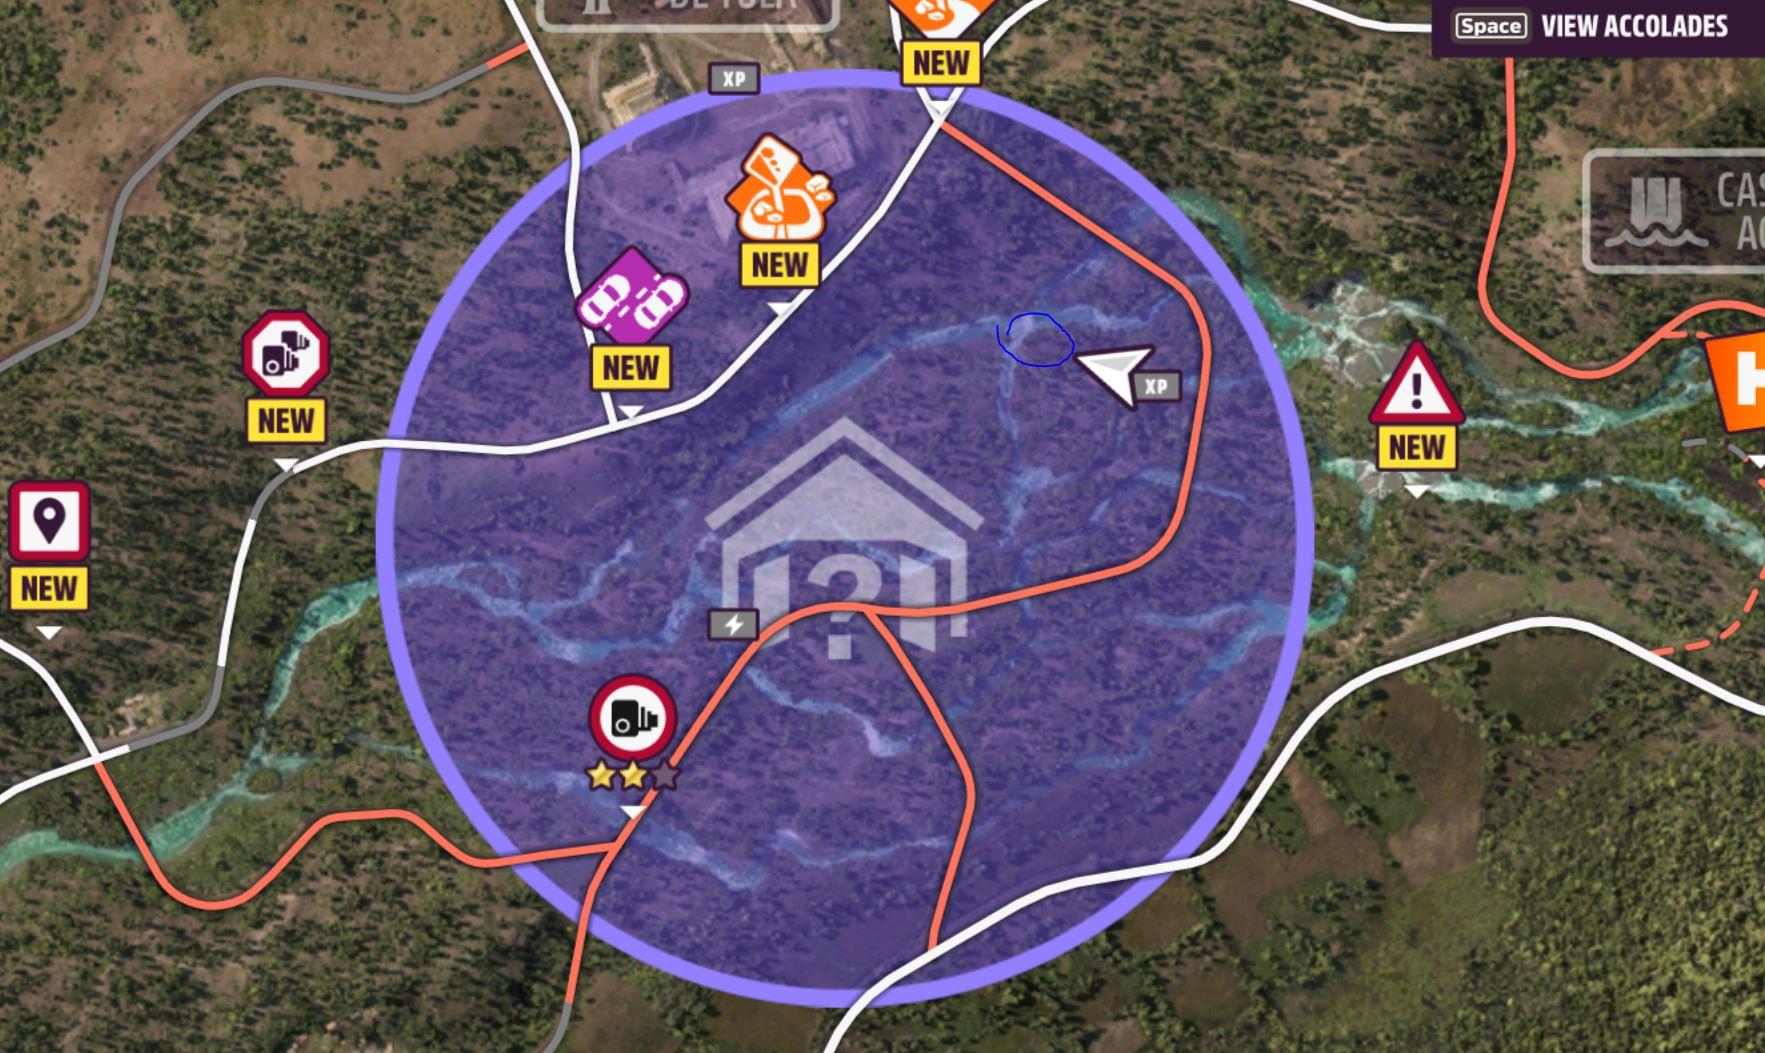 Forza Horizon 5 Barn Finds: All Locations